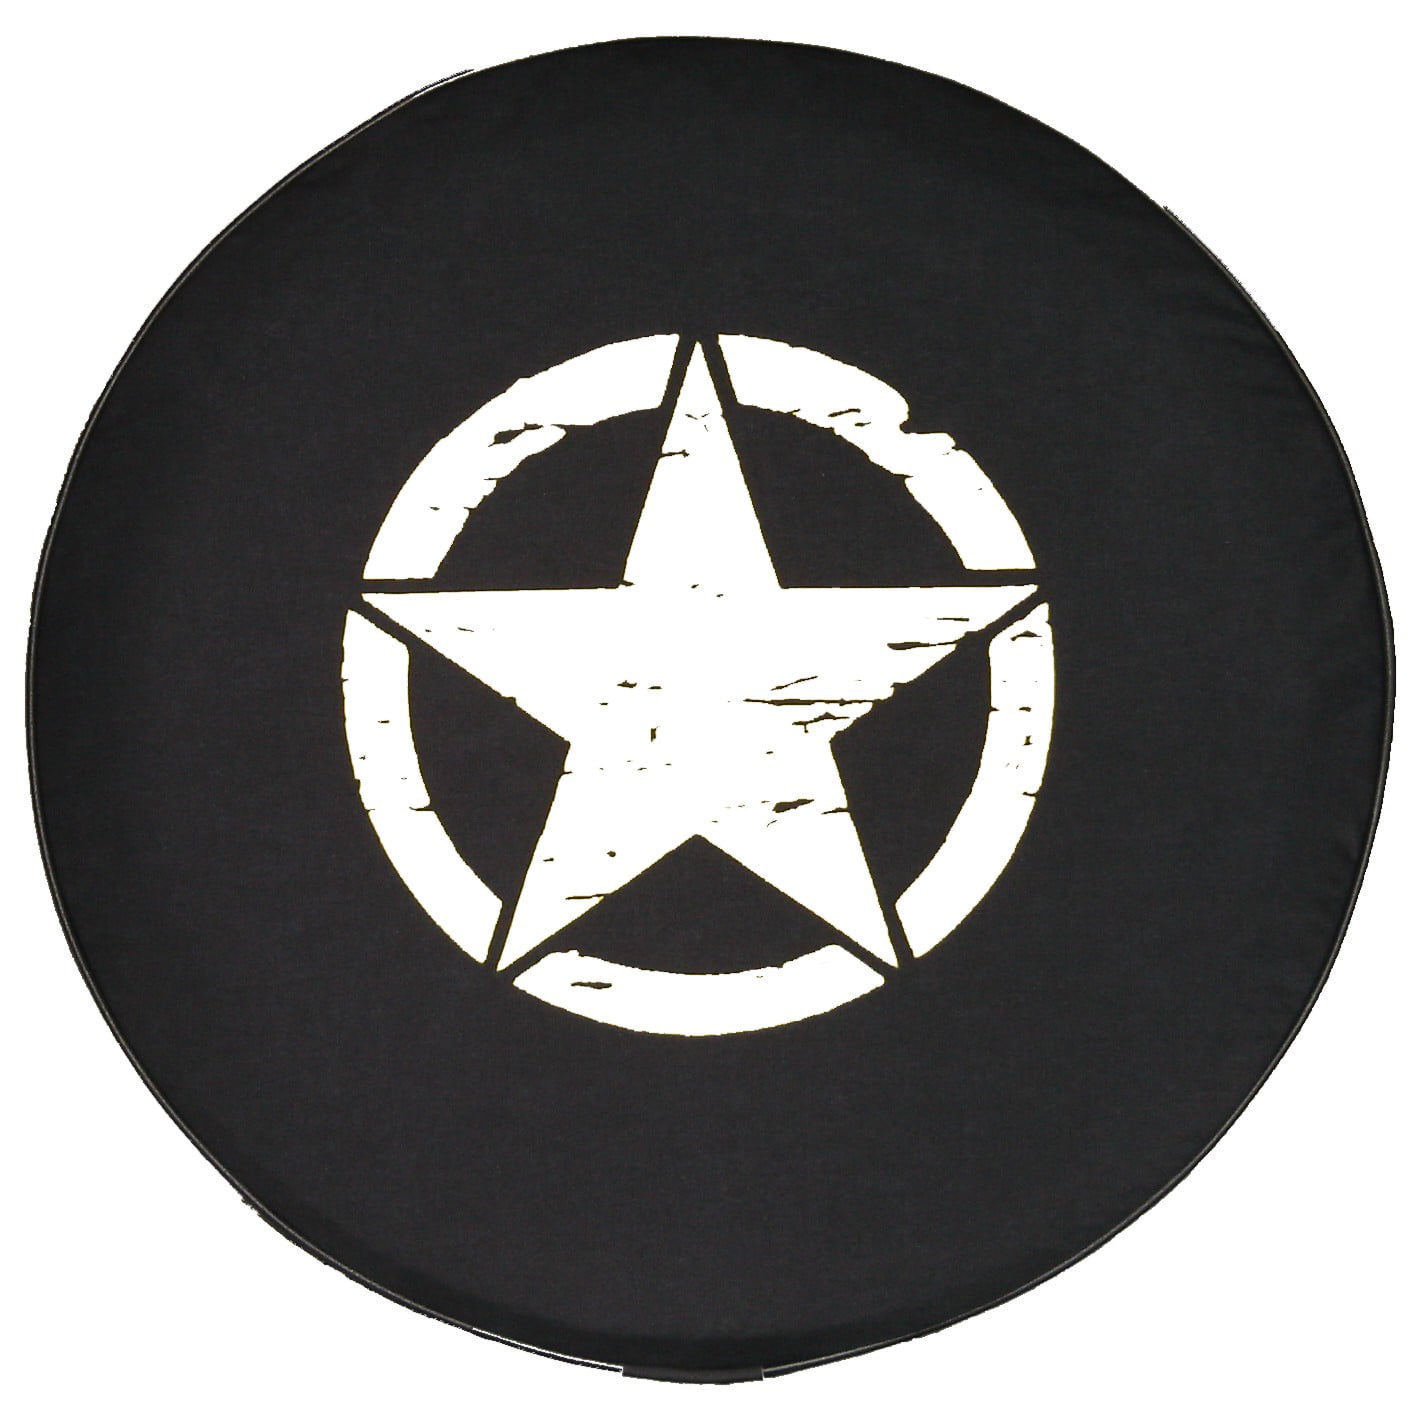 SpareCover® Brawny Series Call of Duty Tire Cover 30" Heavy Denim Vinyl